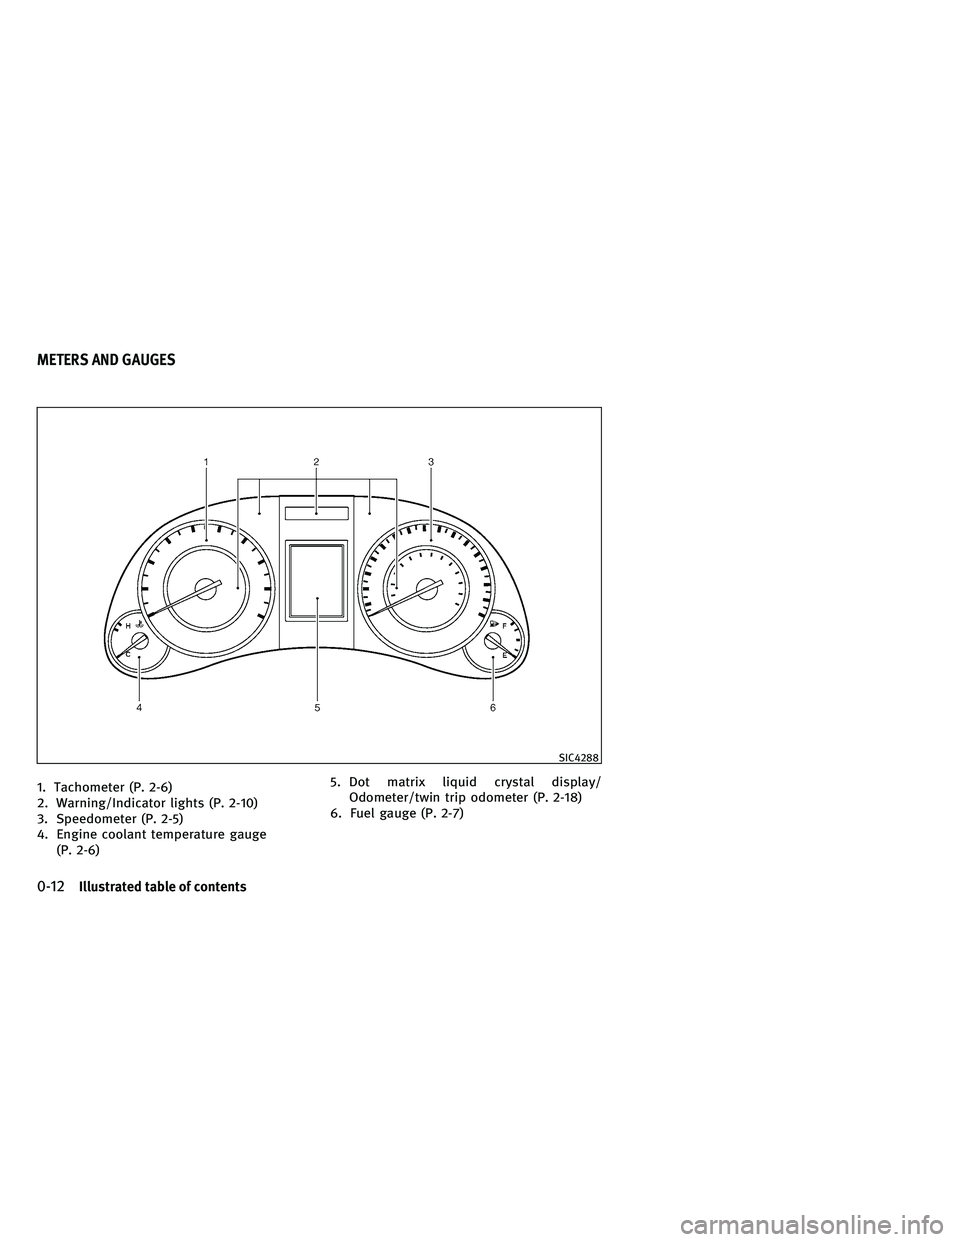 INFINITI G-COUPE 2011  Owners Manual 1. Tachometer (P. 2-6)
2. Warning/Indicator lights (P. 2-10)
3. Speedometer (P. 2-5)
4. Engine coolant temperature gauge(P. 2-6) 5. Dot matrix liquid crystal display/
Odometer/twin trip odometer (P. 2